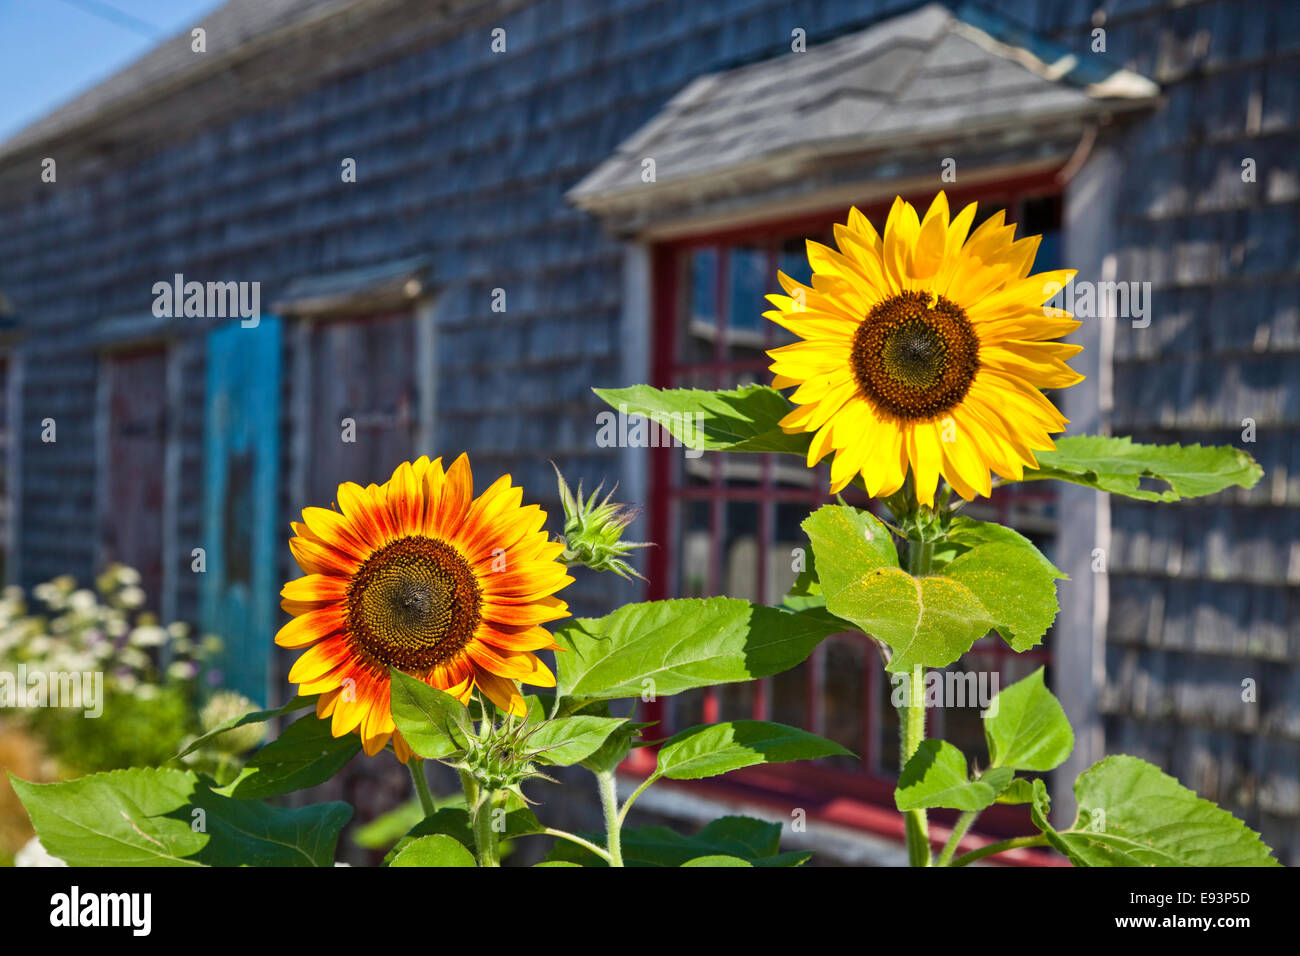 Sunflowers outside the Frying Pan Gallery in Wellfleet Stock Photo